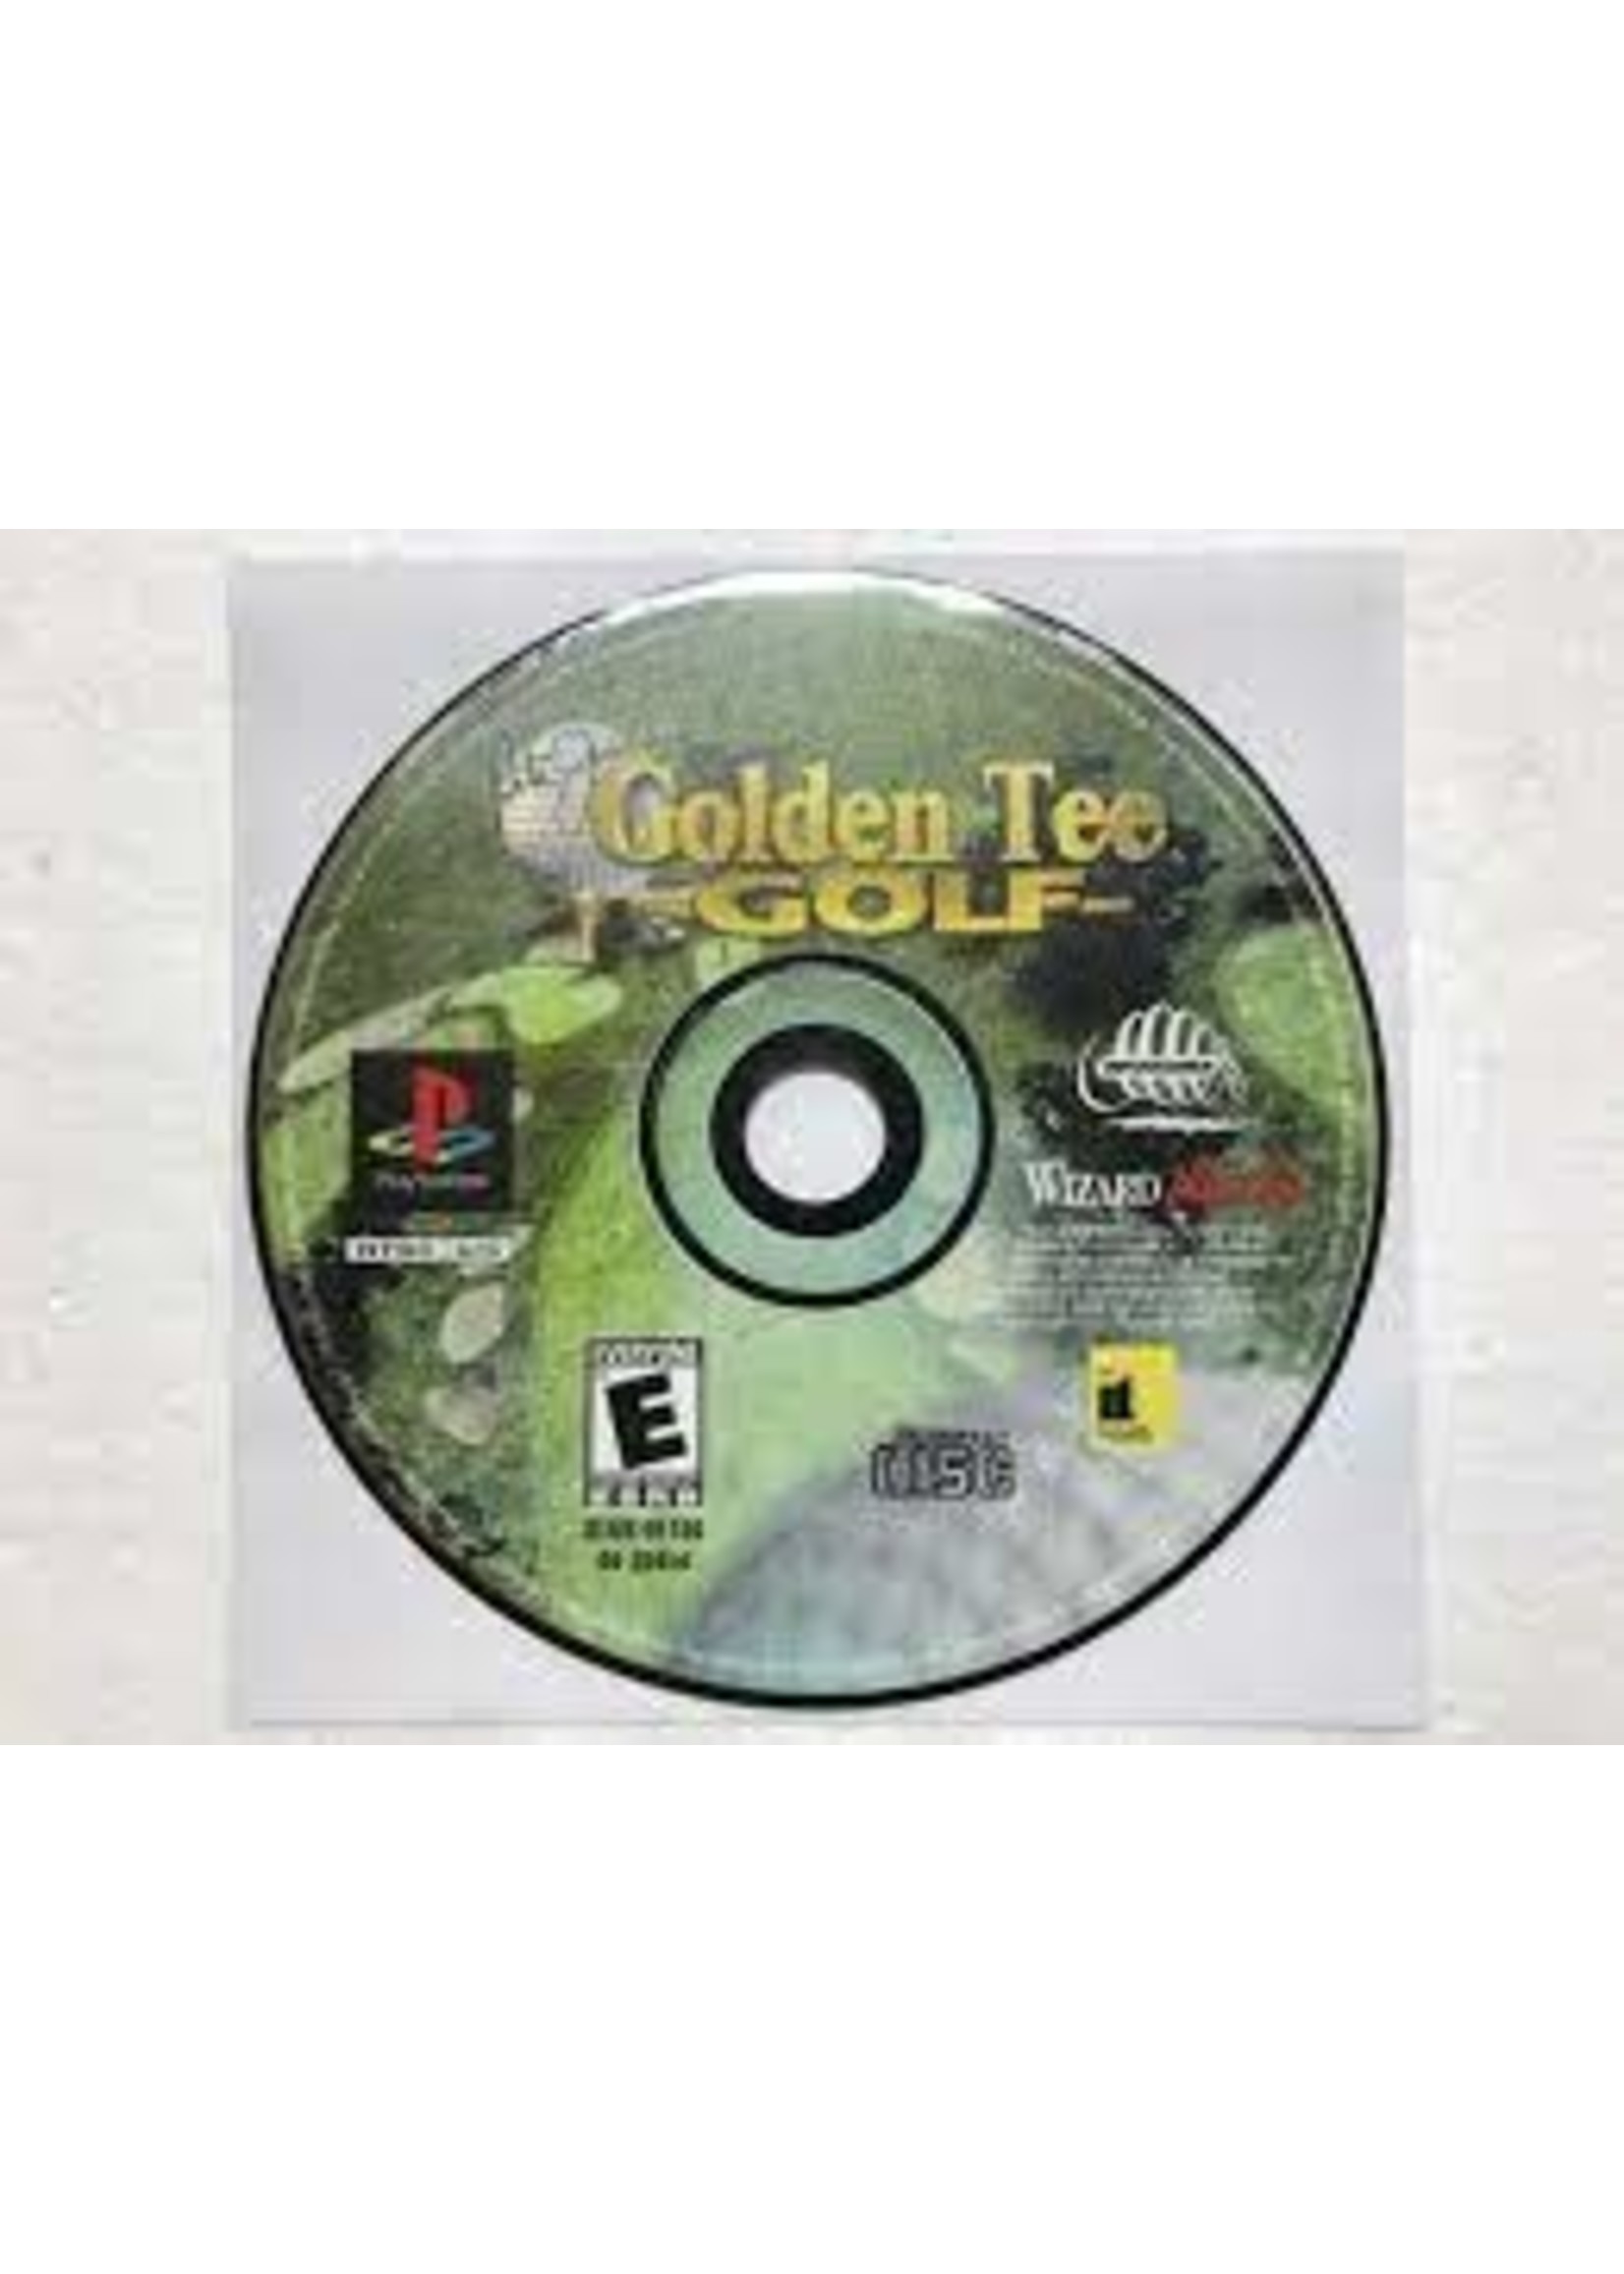 Sony Playstation 1 (PS1) Golden Tee Golf - Print